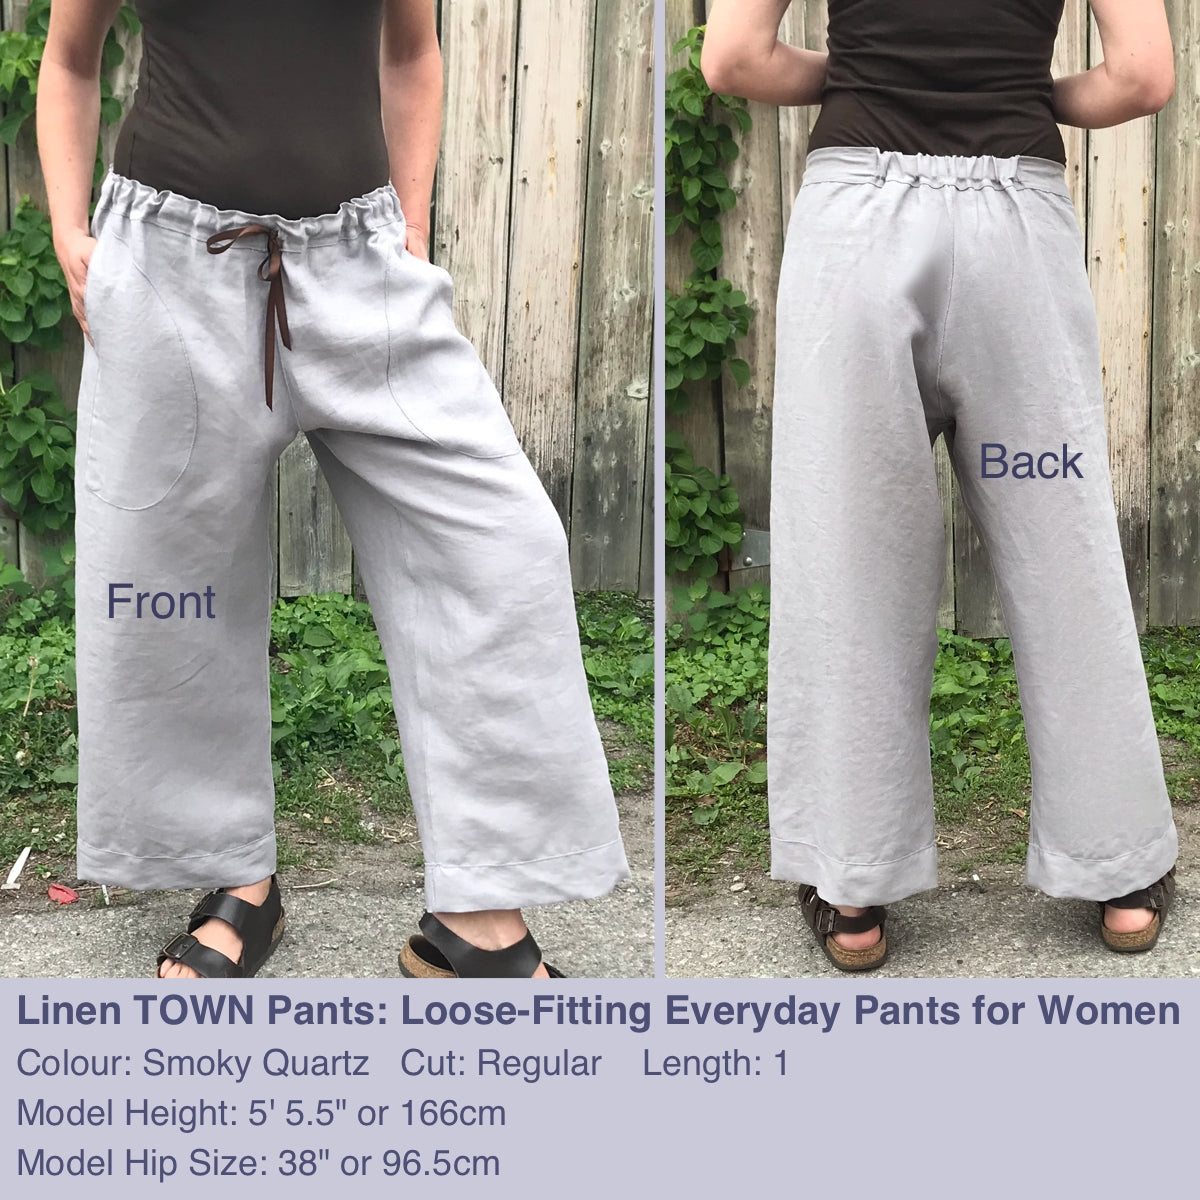 Linen TOWN Pants: Loose-Fitting Everyday Pants for Women – Dear Lil' Devas